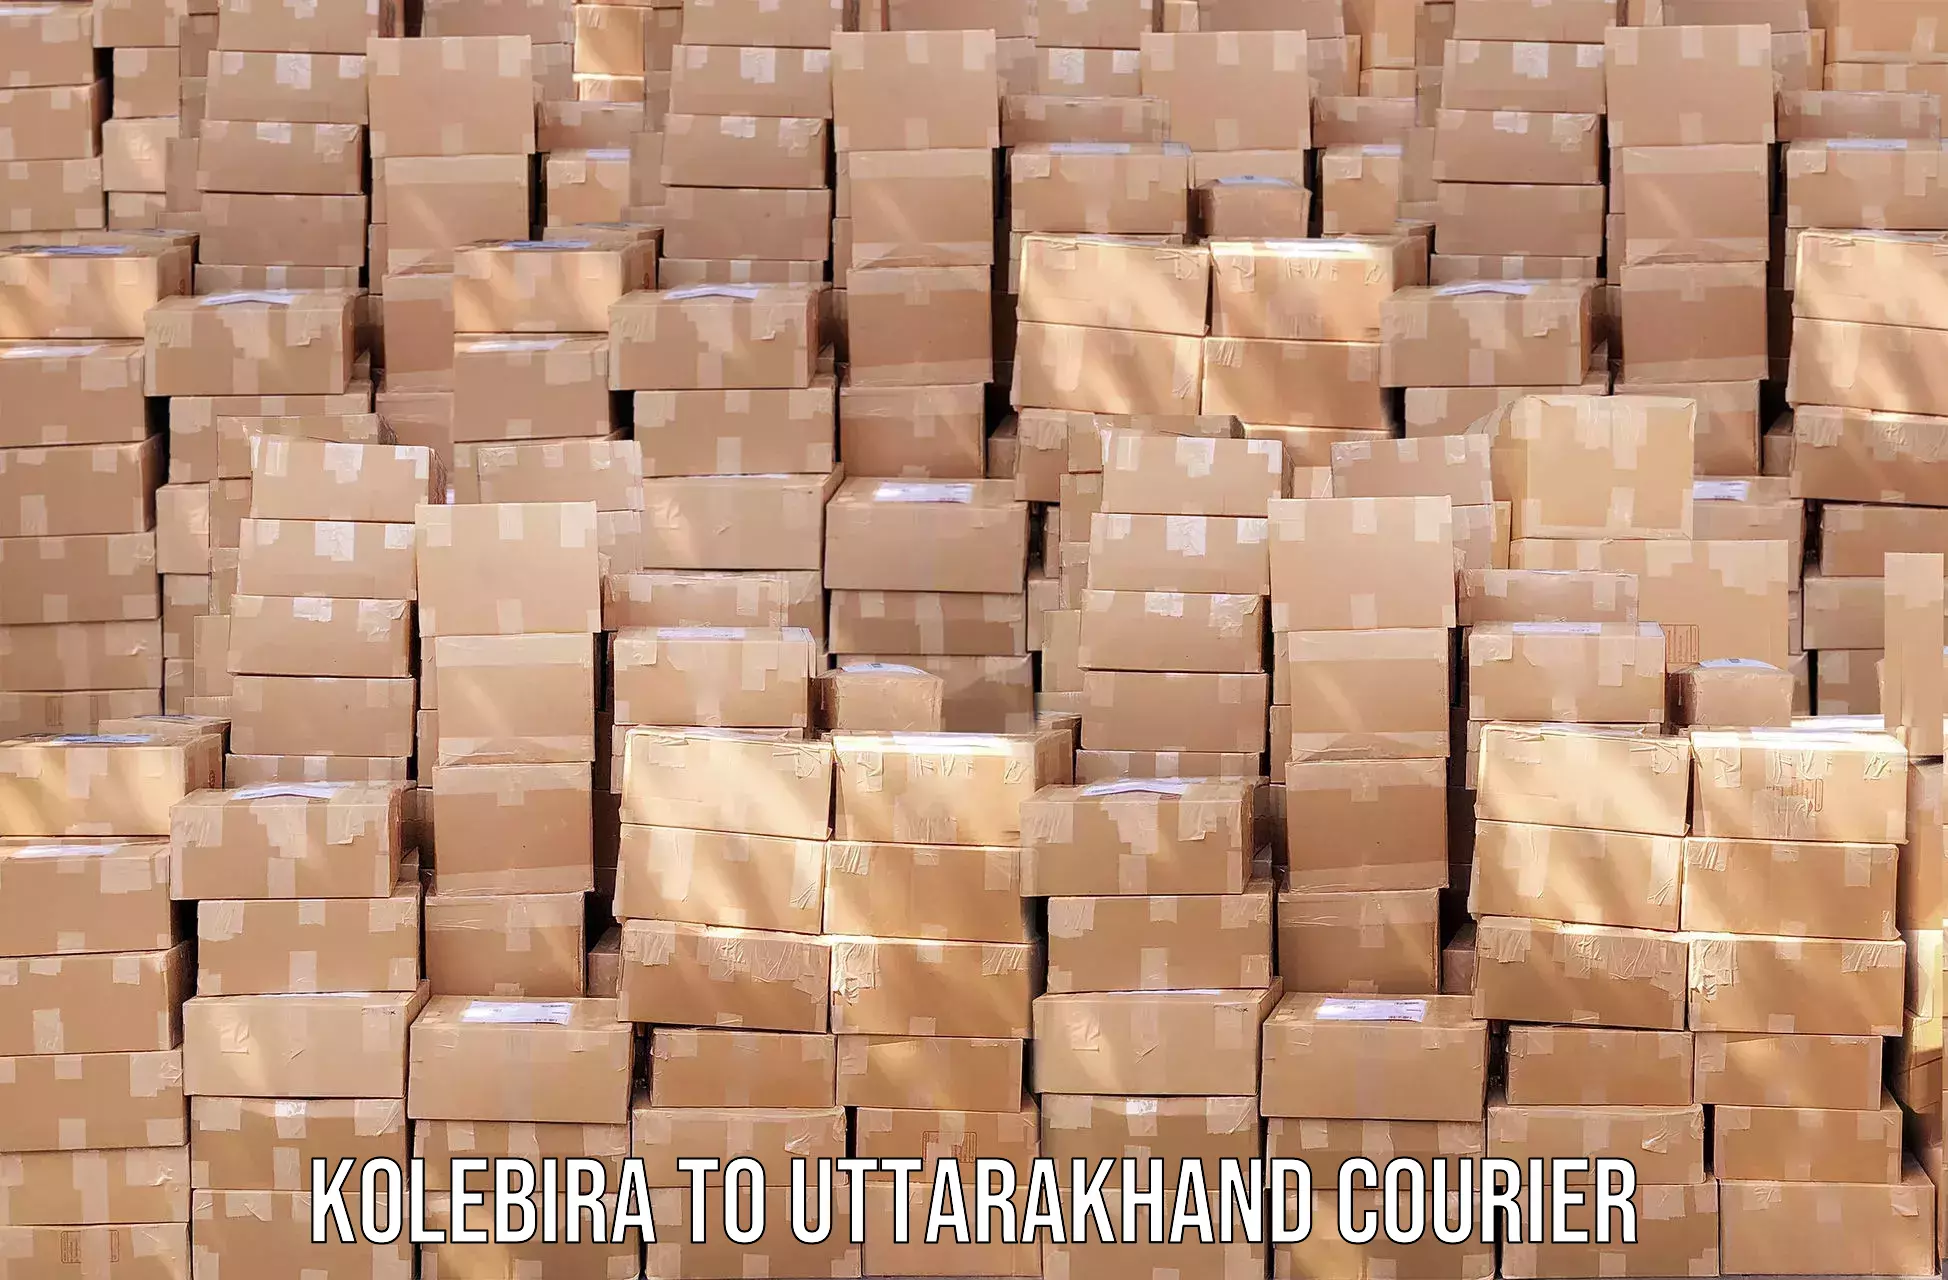 Courier service innovation Kolebira to Uttarakhand